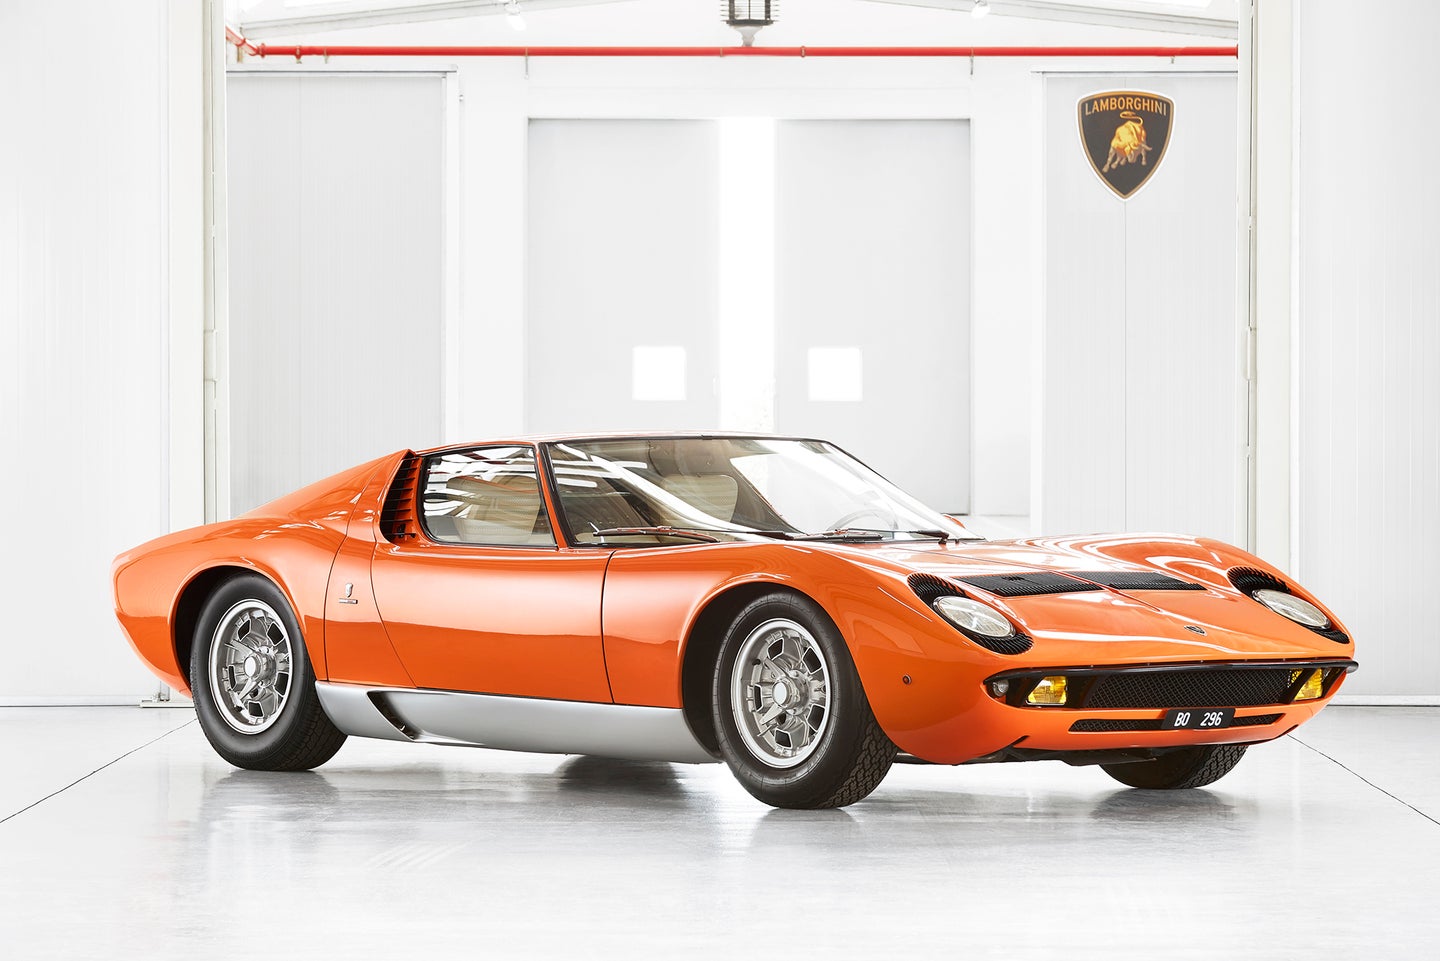 1968 Lamborghini Miura From Original The Italian Job Resurfaces After Missing for Decades